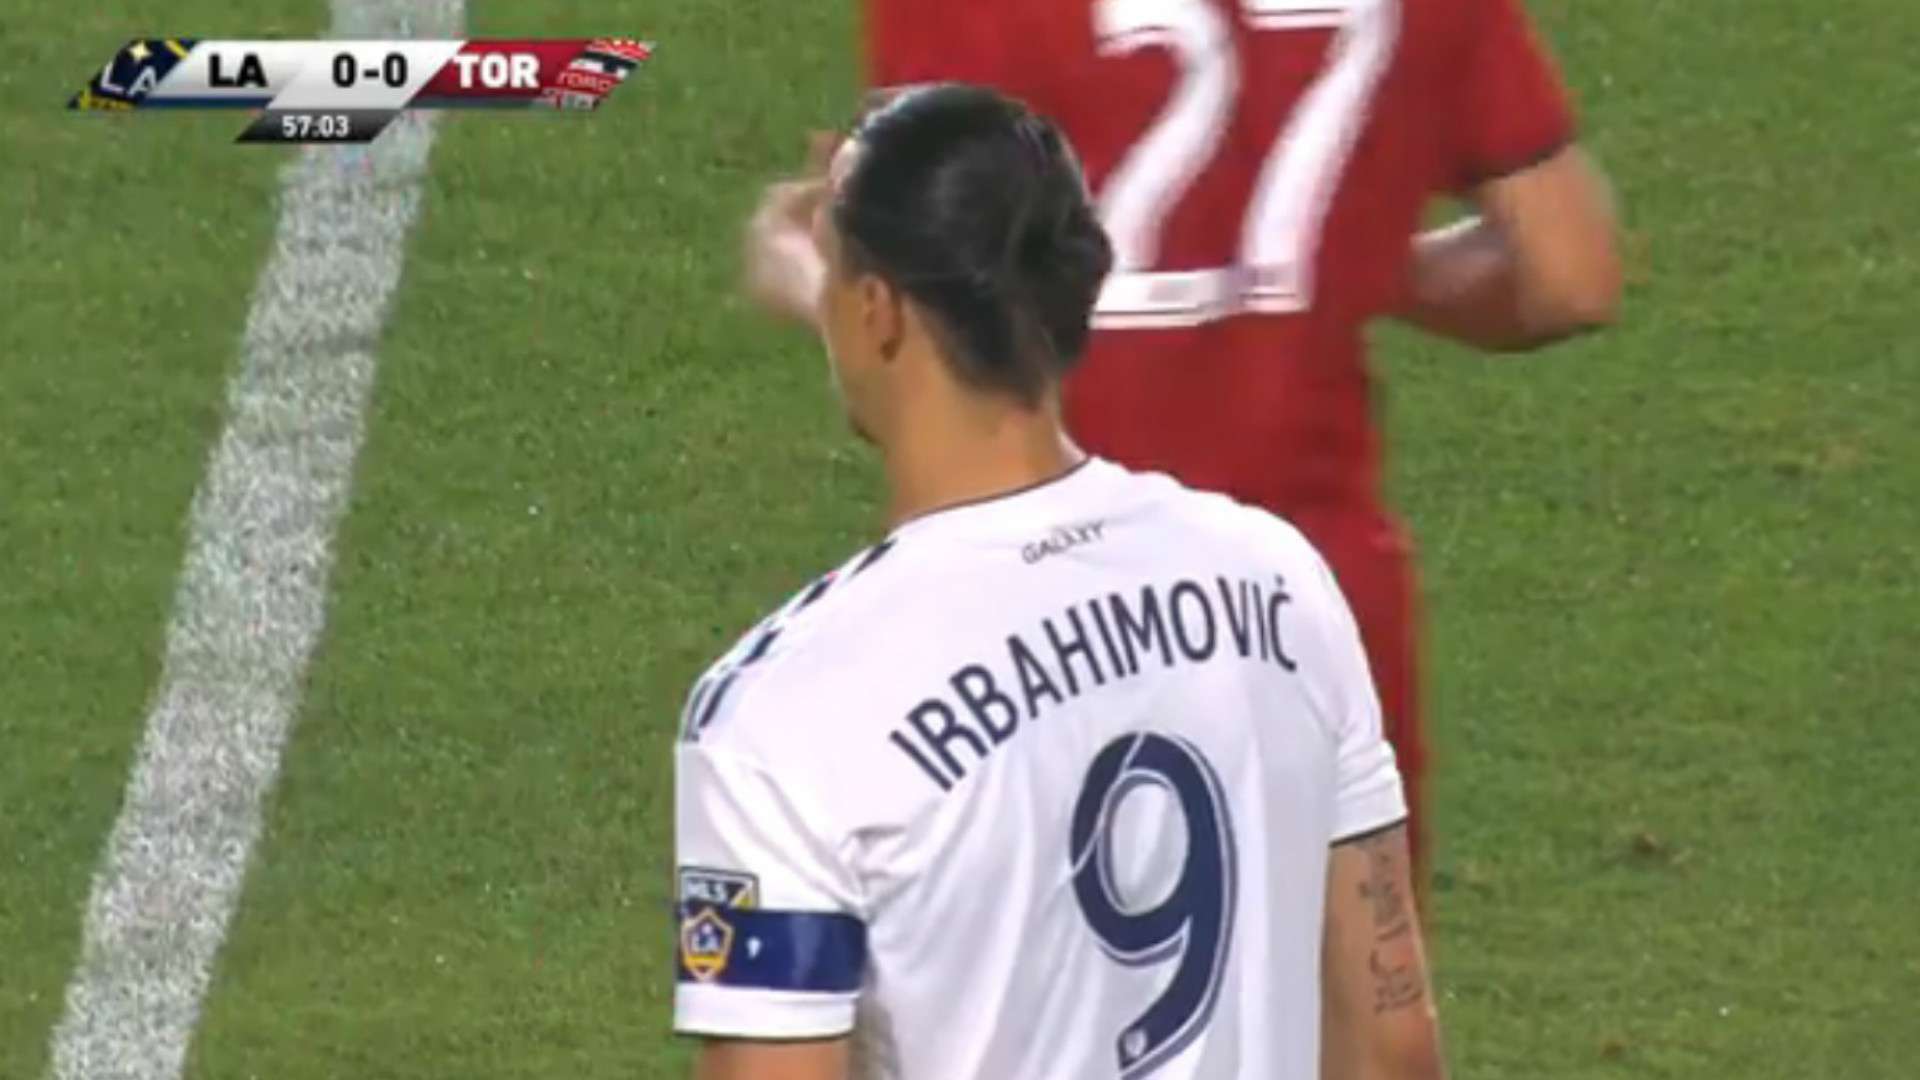 EMBED ONLY Ibrahimovic Screenshot